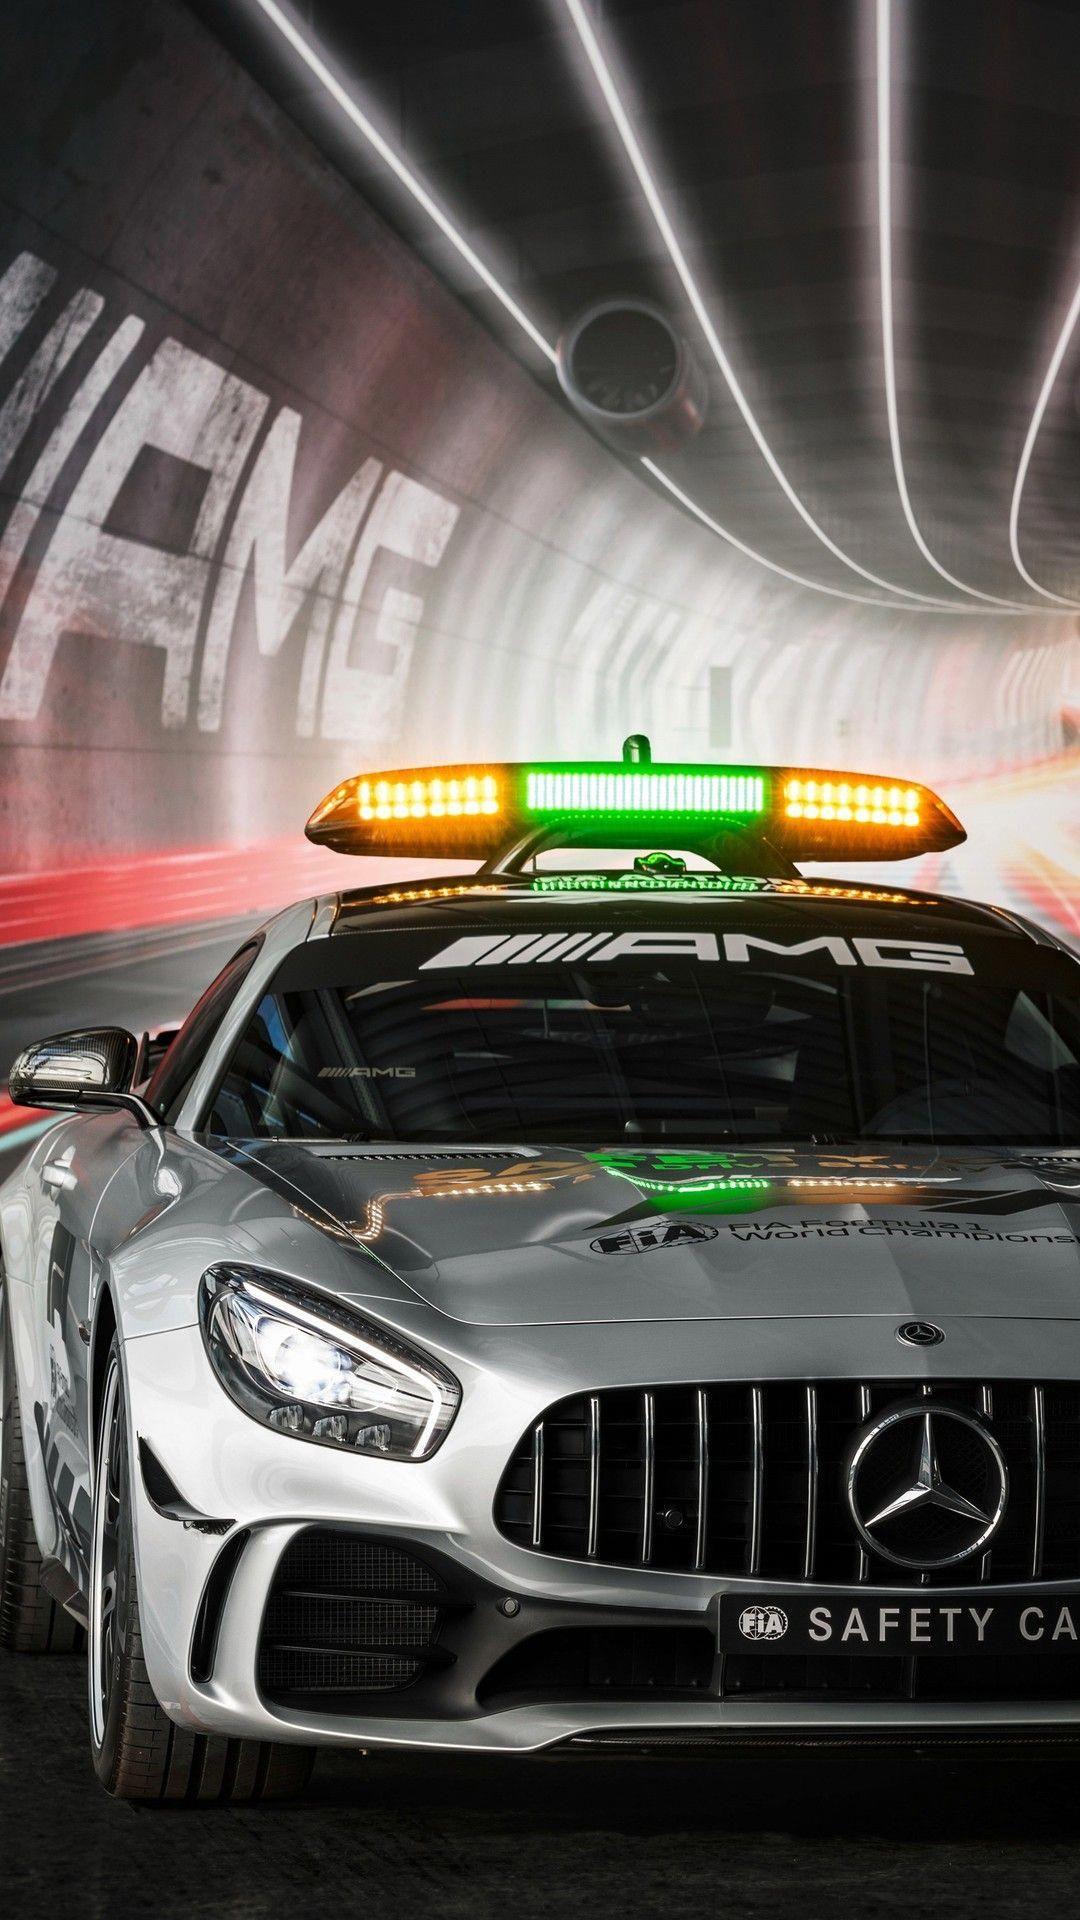 Cars #Mercedes AMG safety car f1 #wallpaper HD 4k background